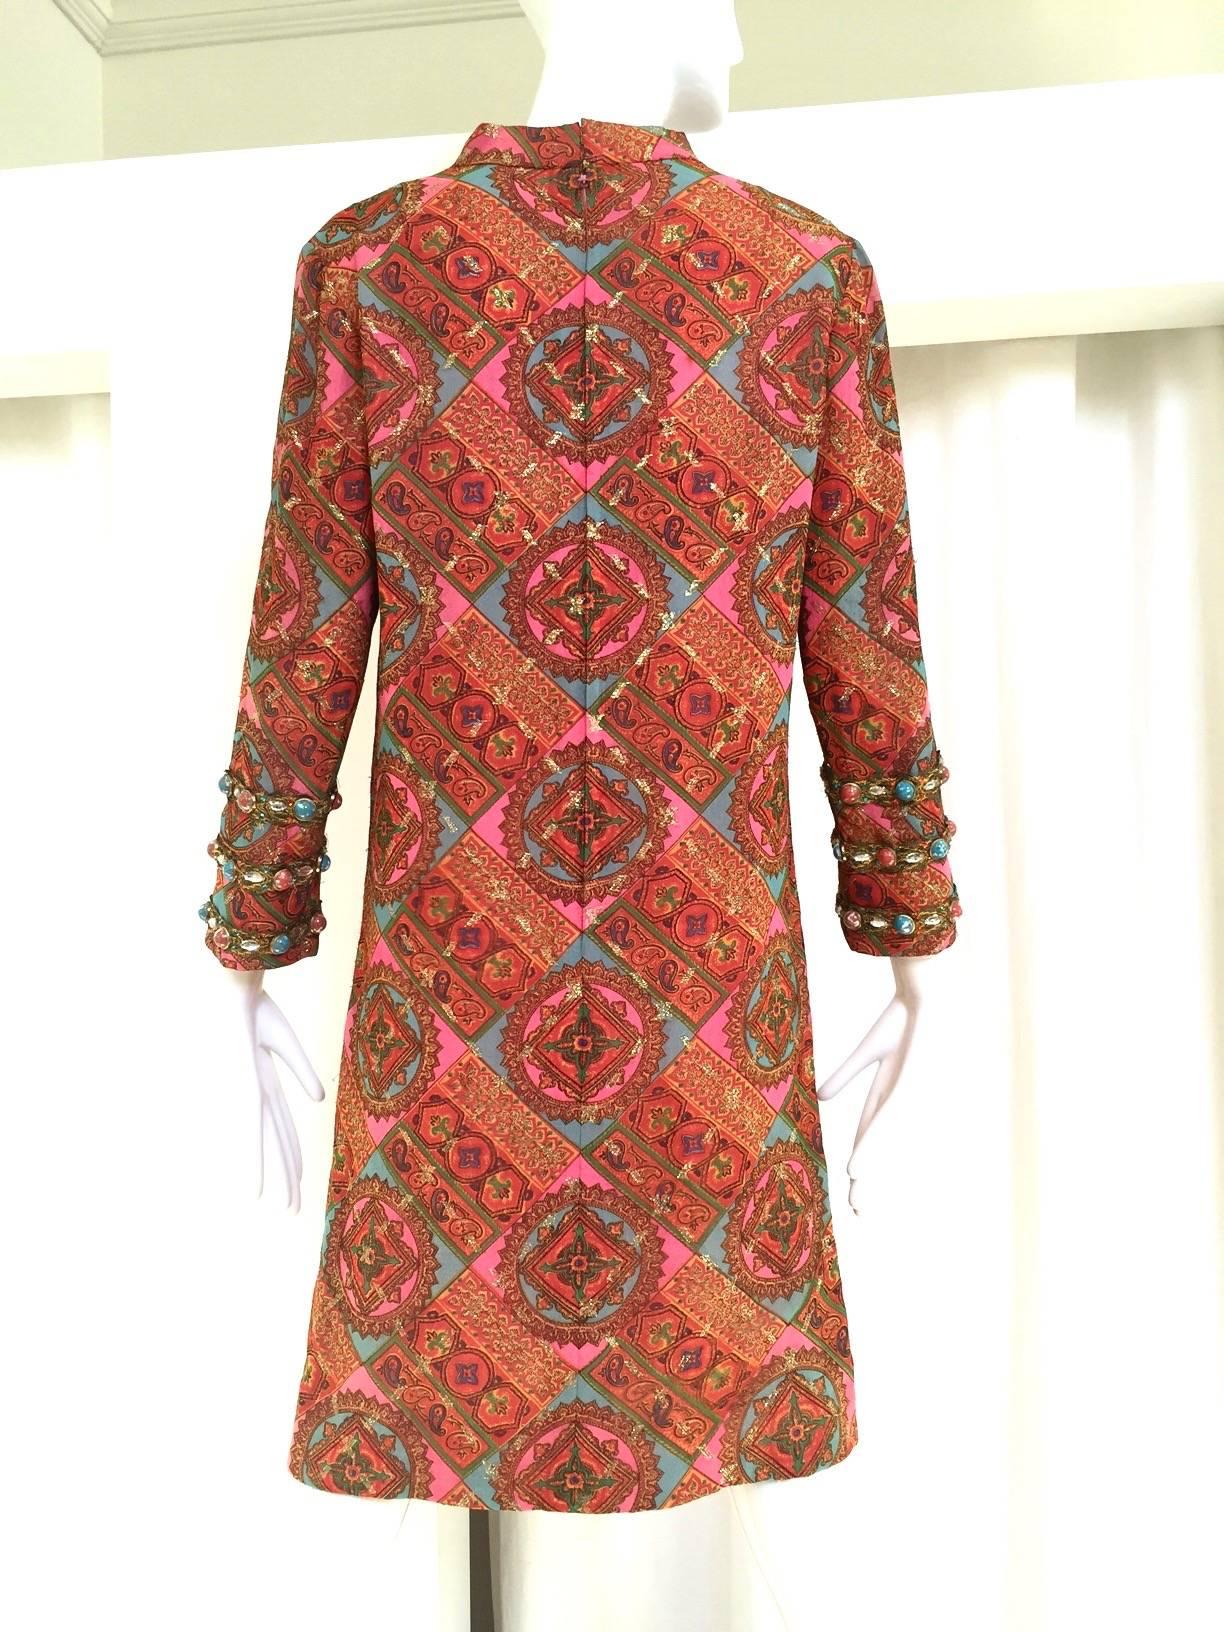 60s Bill Blass pink, orange and blue silk paisley print dress with jeweled cuffs.
Bust: 36